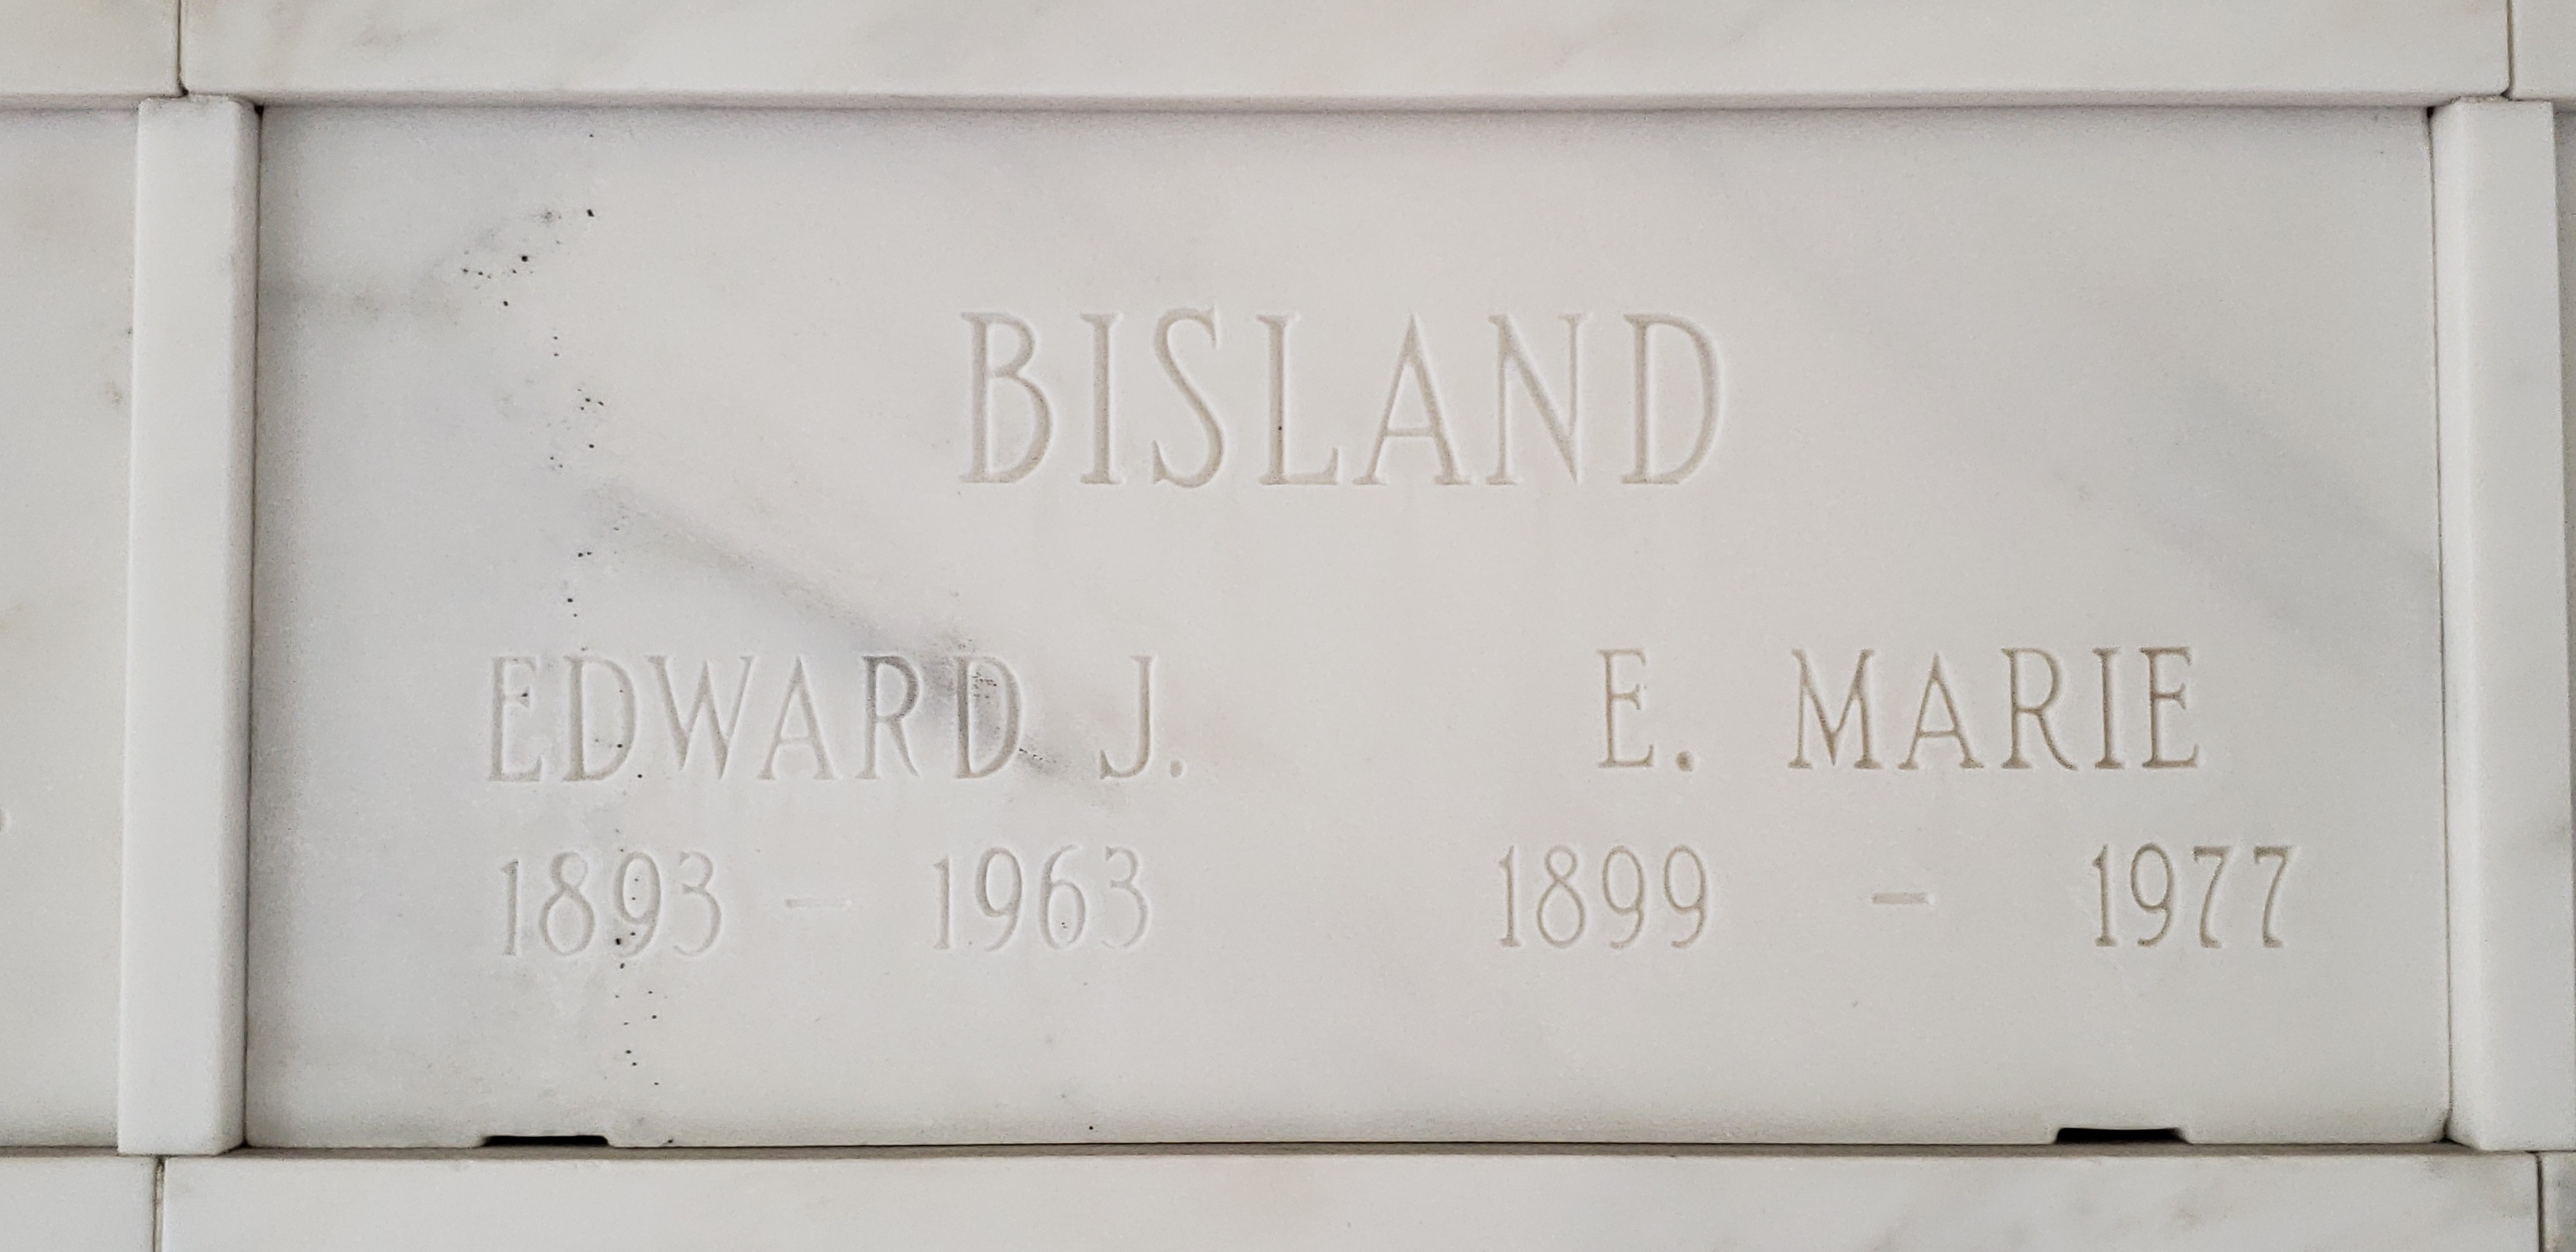 Edward J Bisland